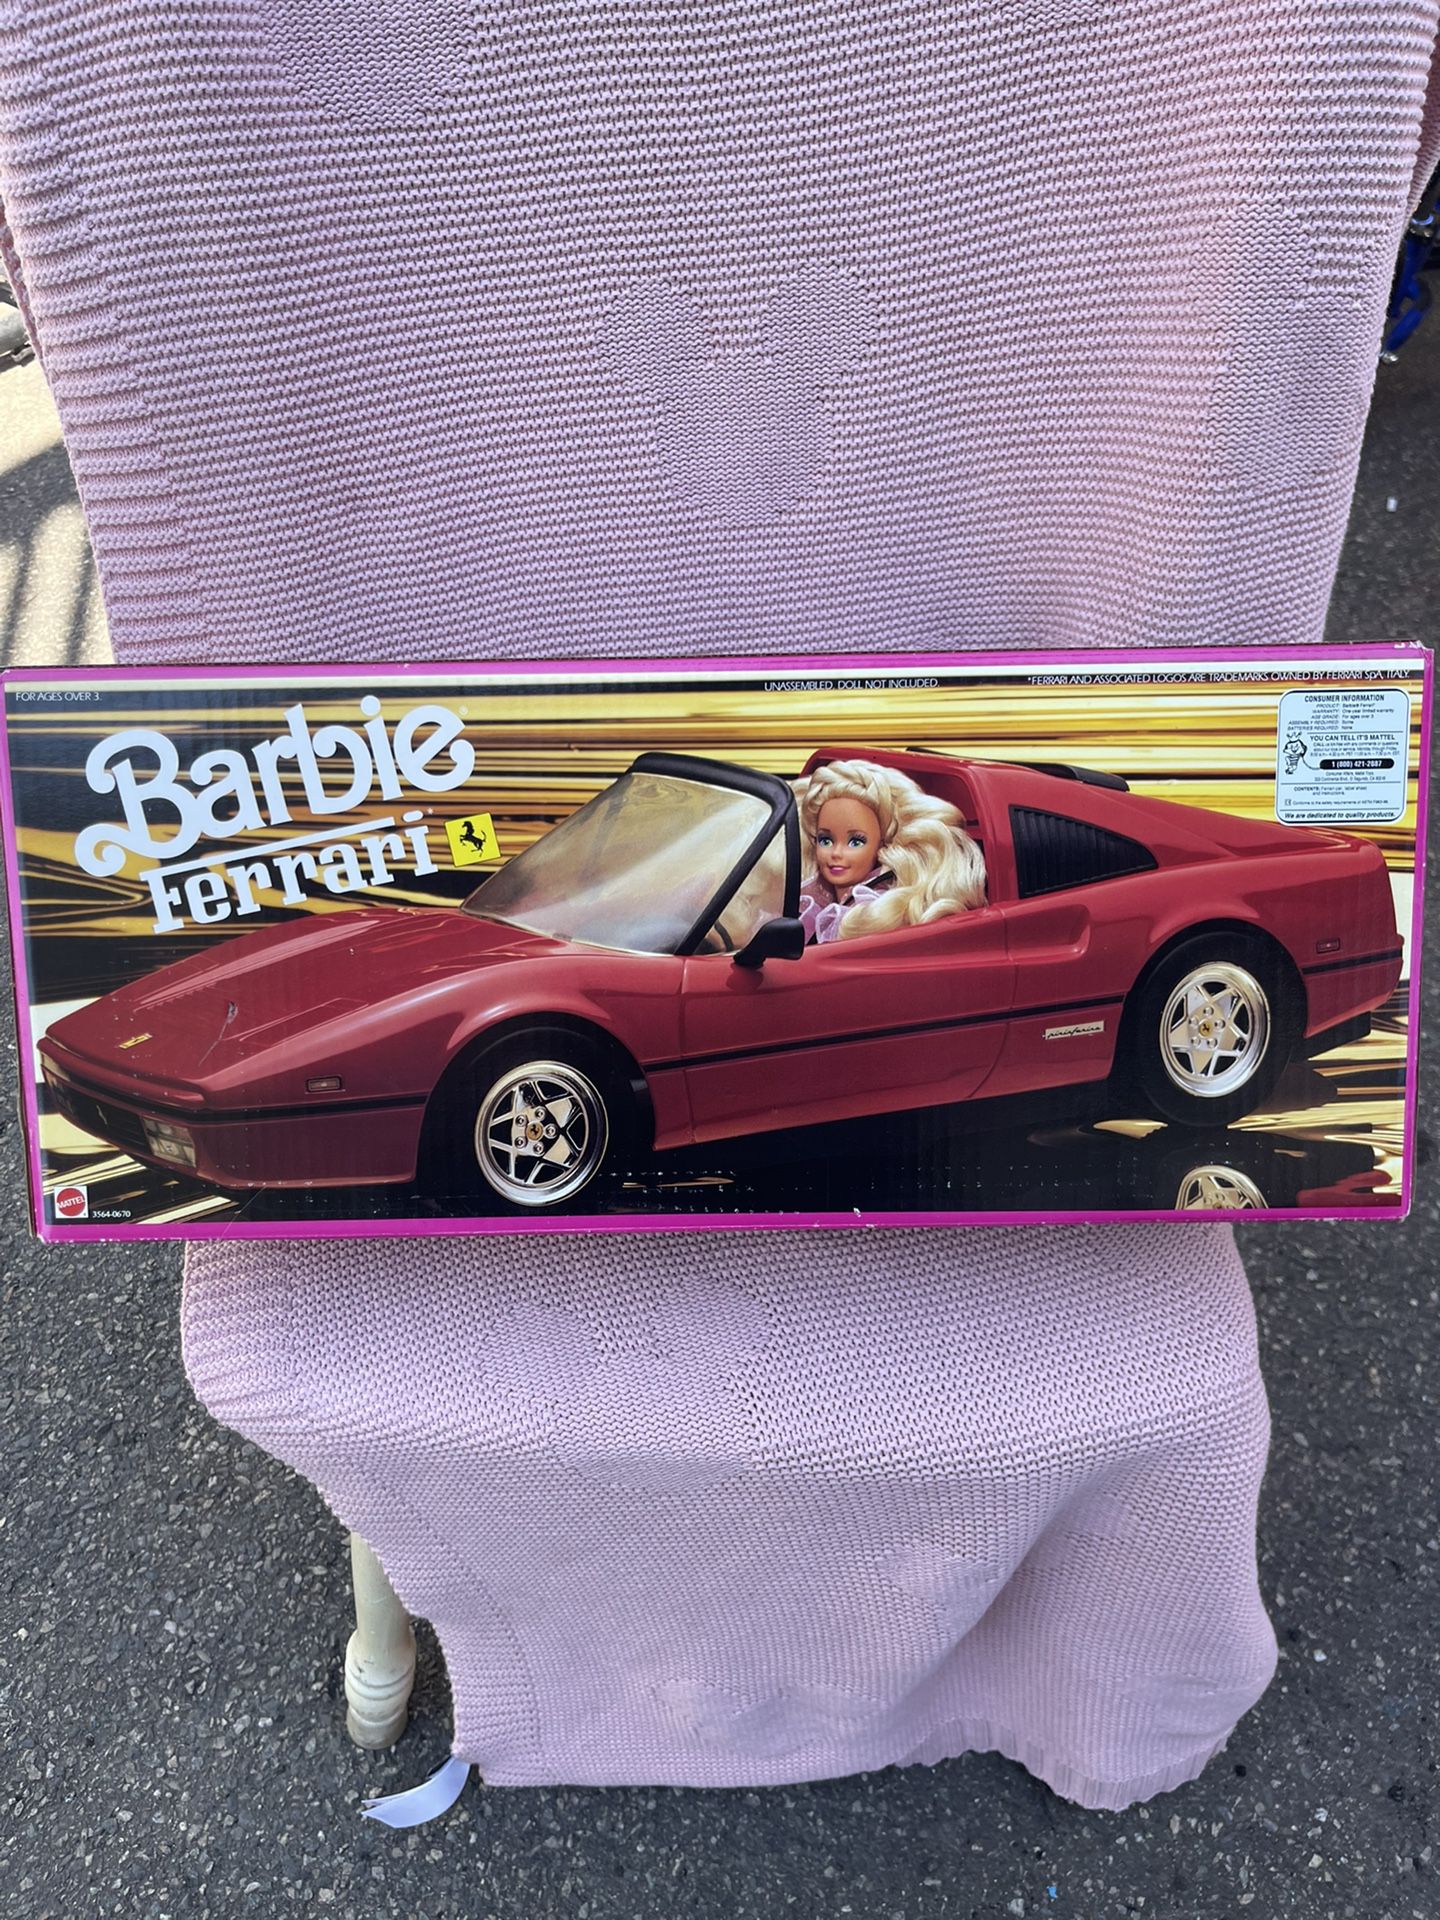 Factory Sealed Barbie Ferrari